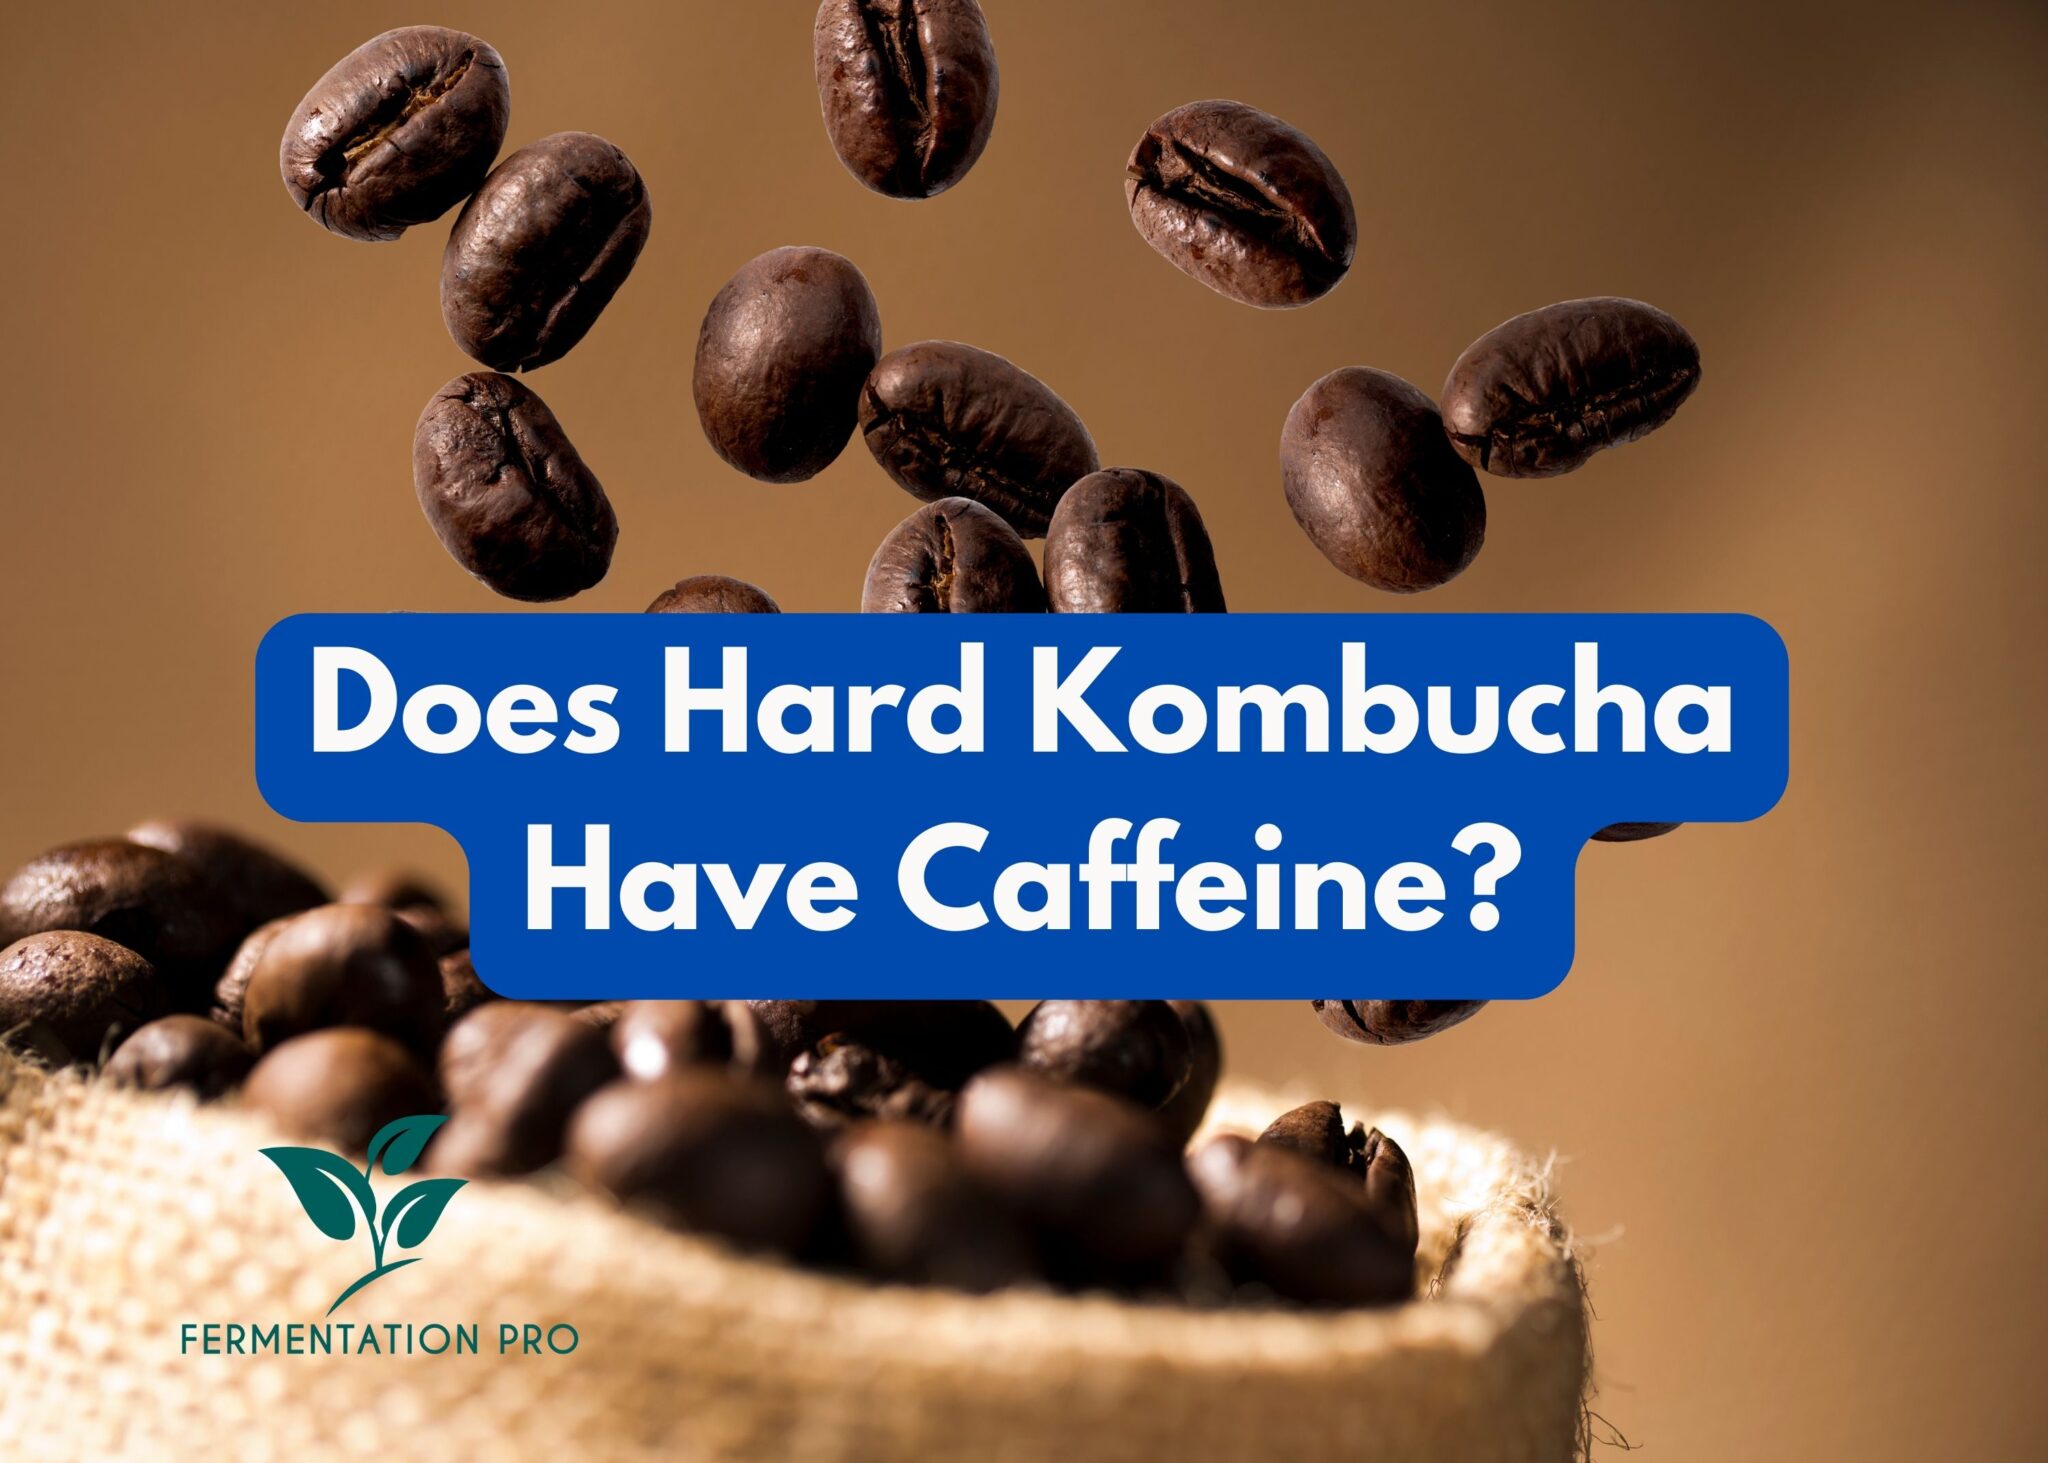 Does Hard Kombucha Have Caffeine?